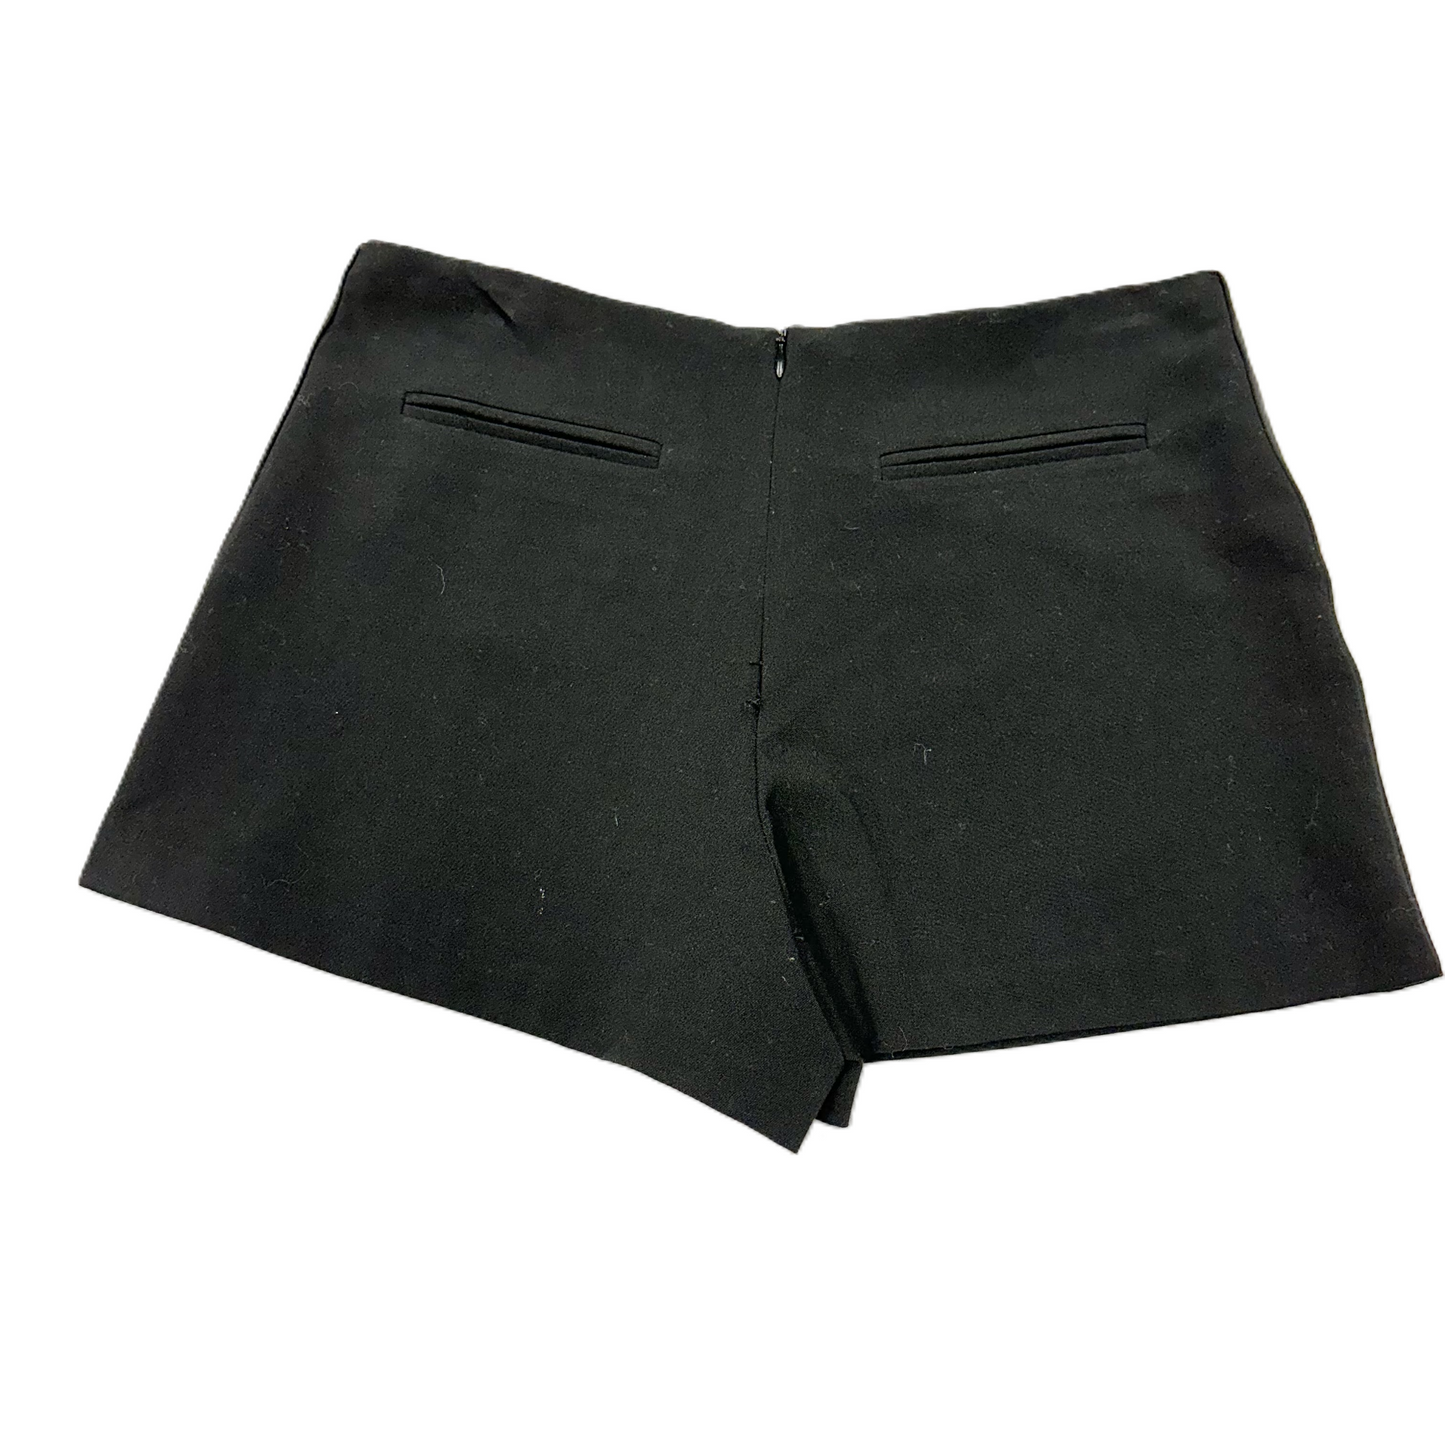 Black Shorts By Aqua, Size: M